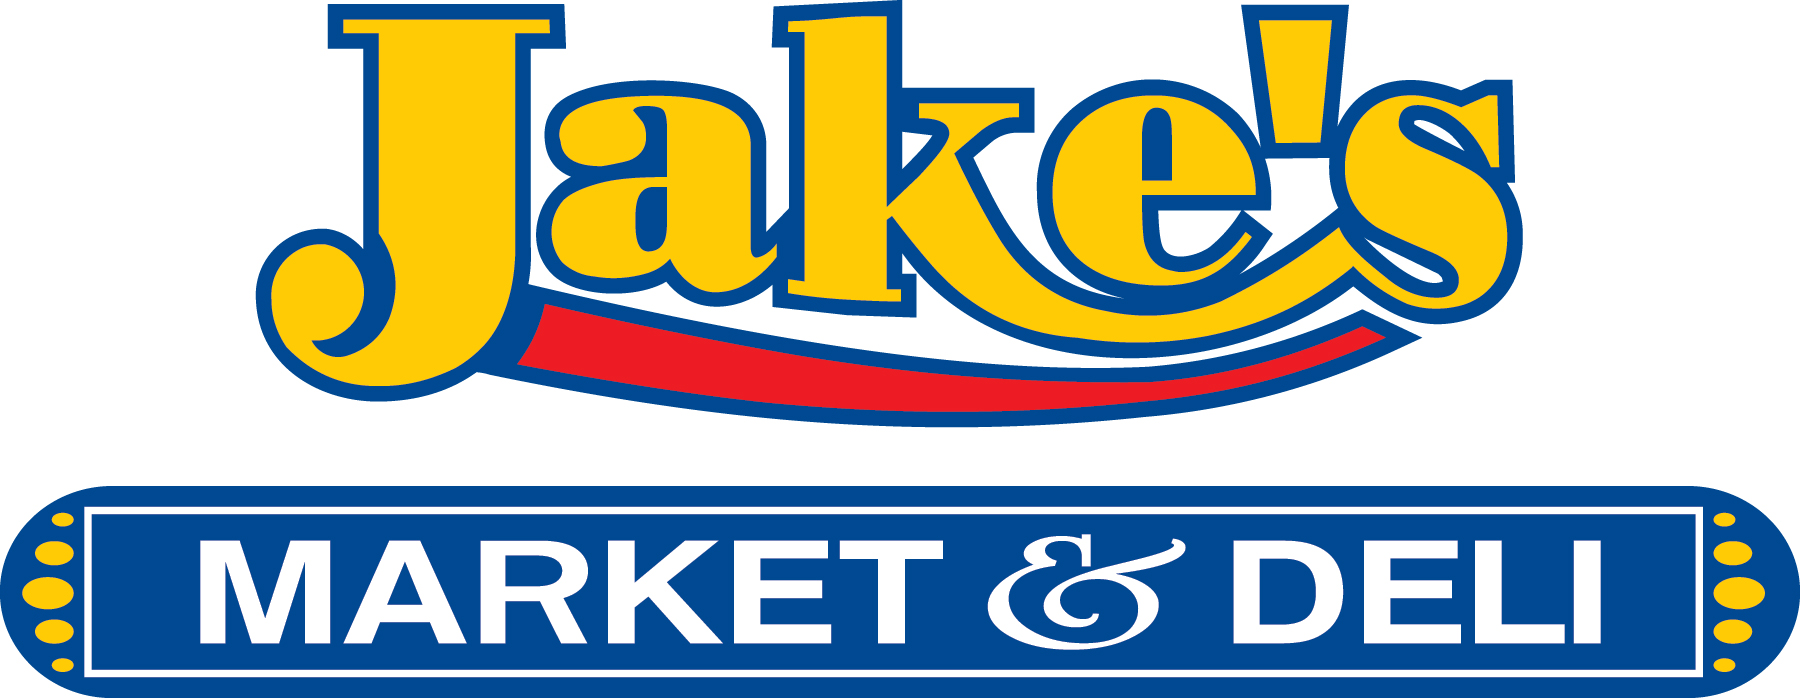 jakes market logo